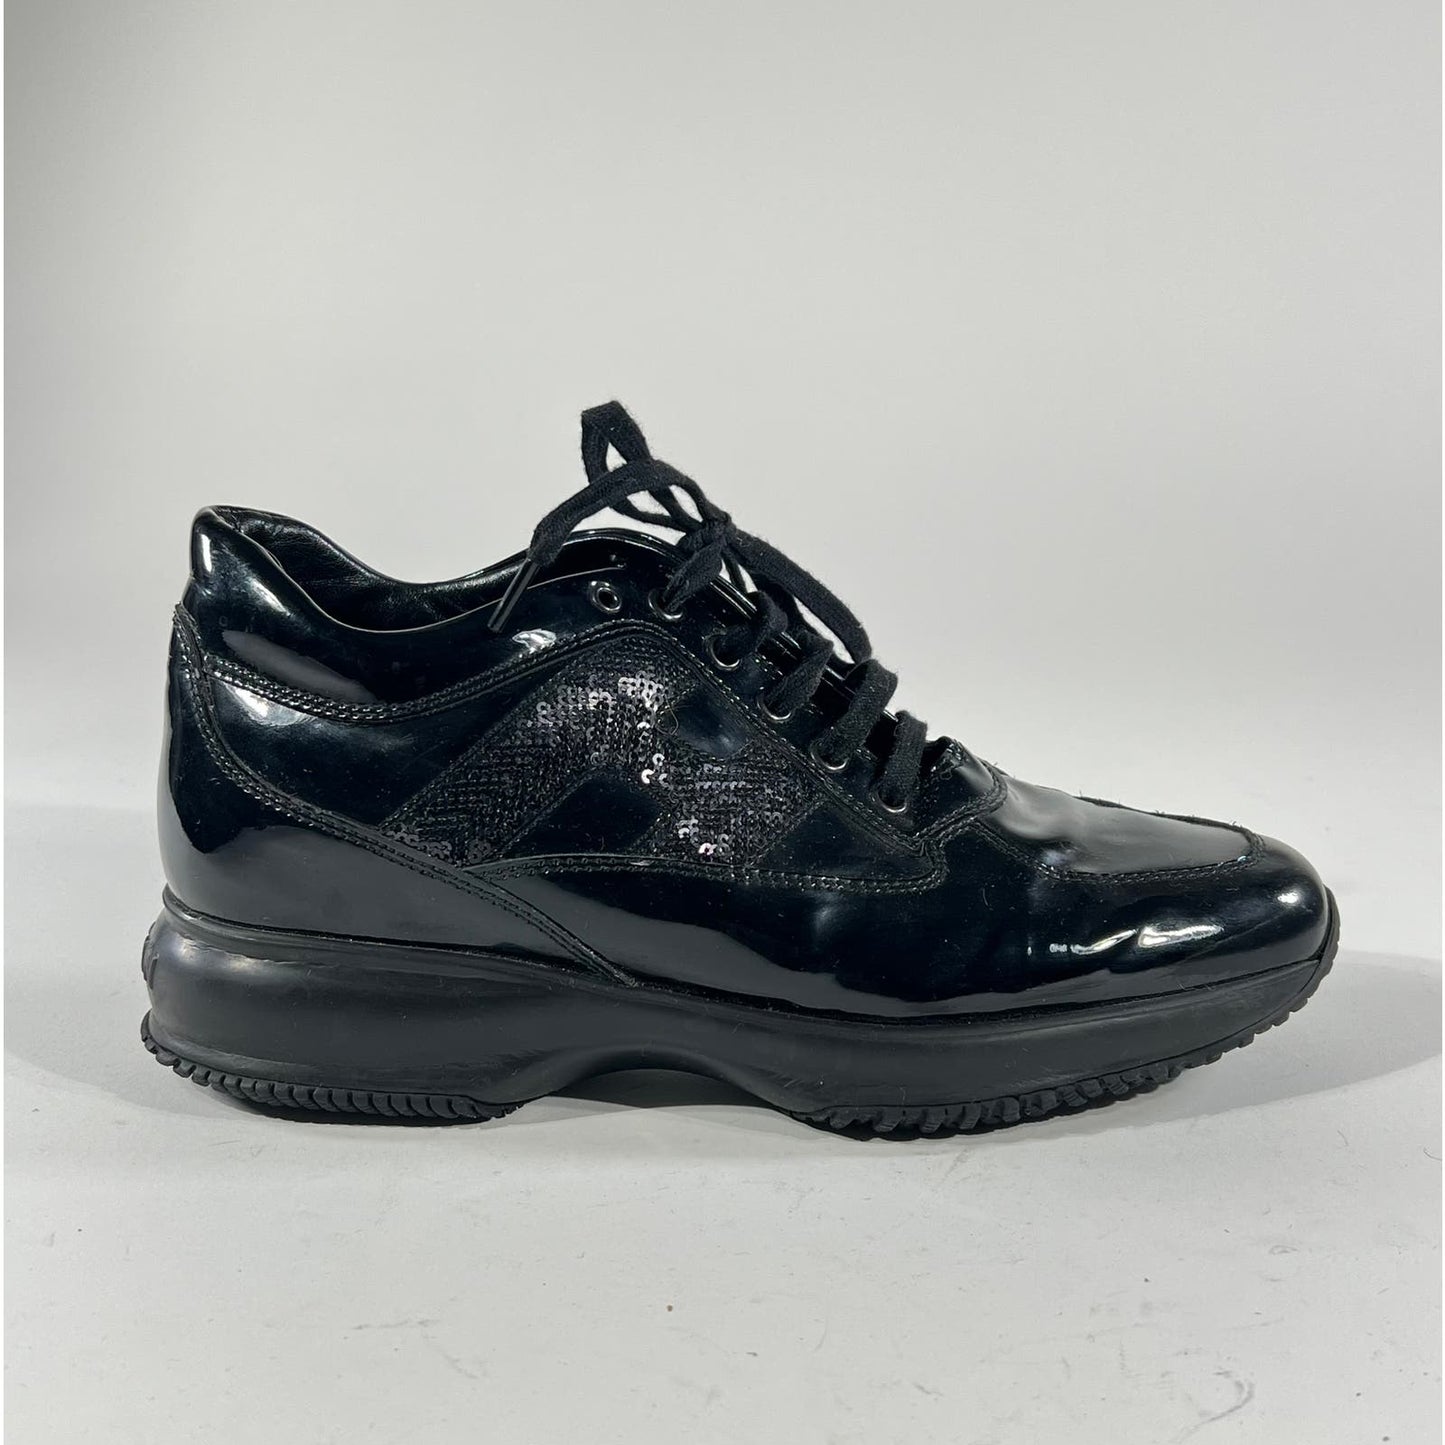 Hogan Black Sneakers